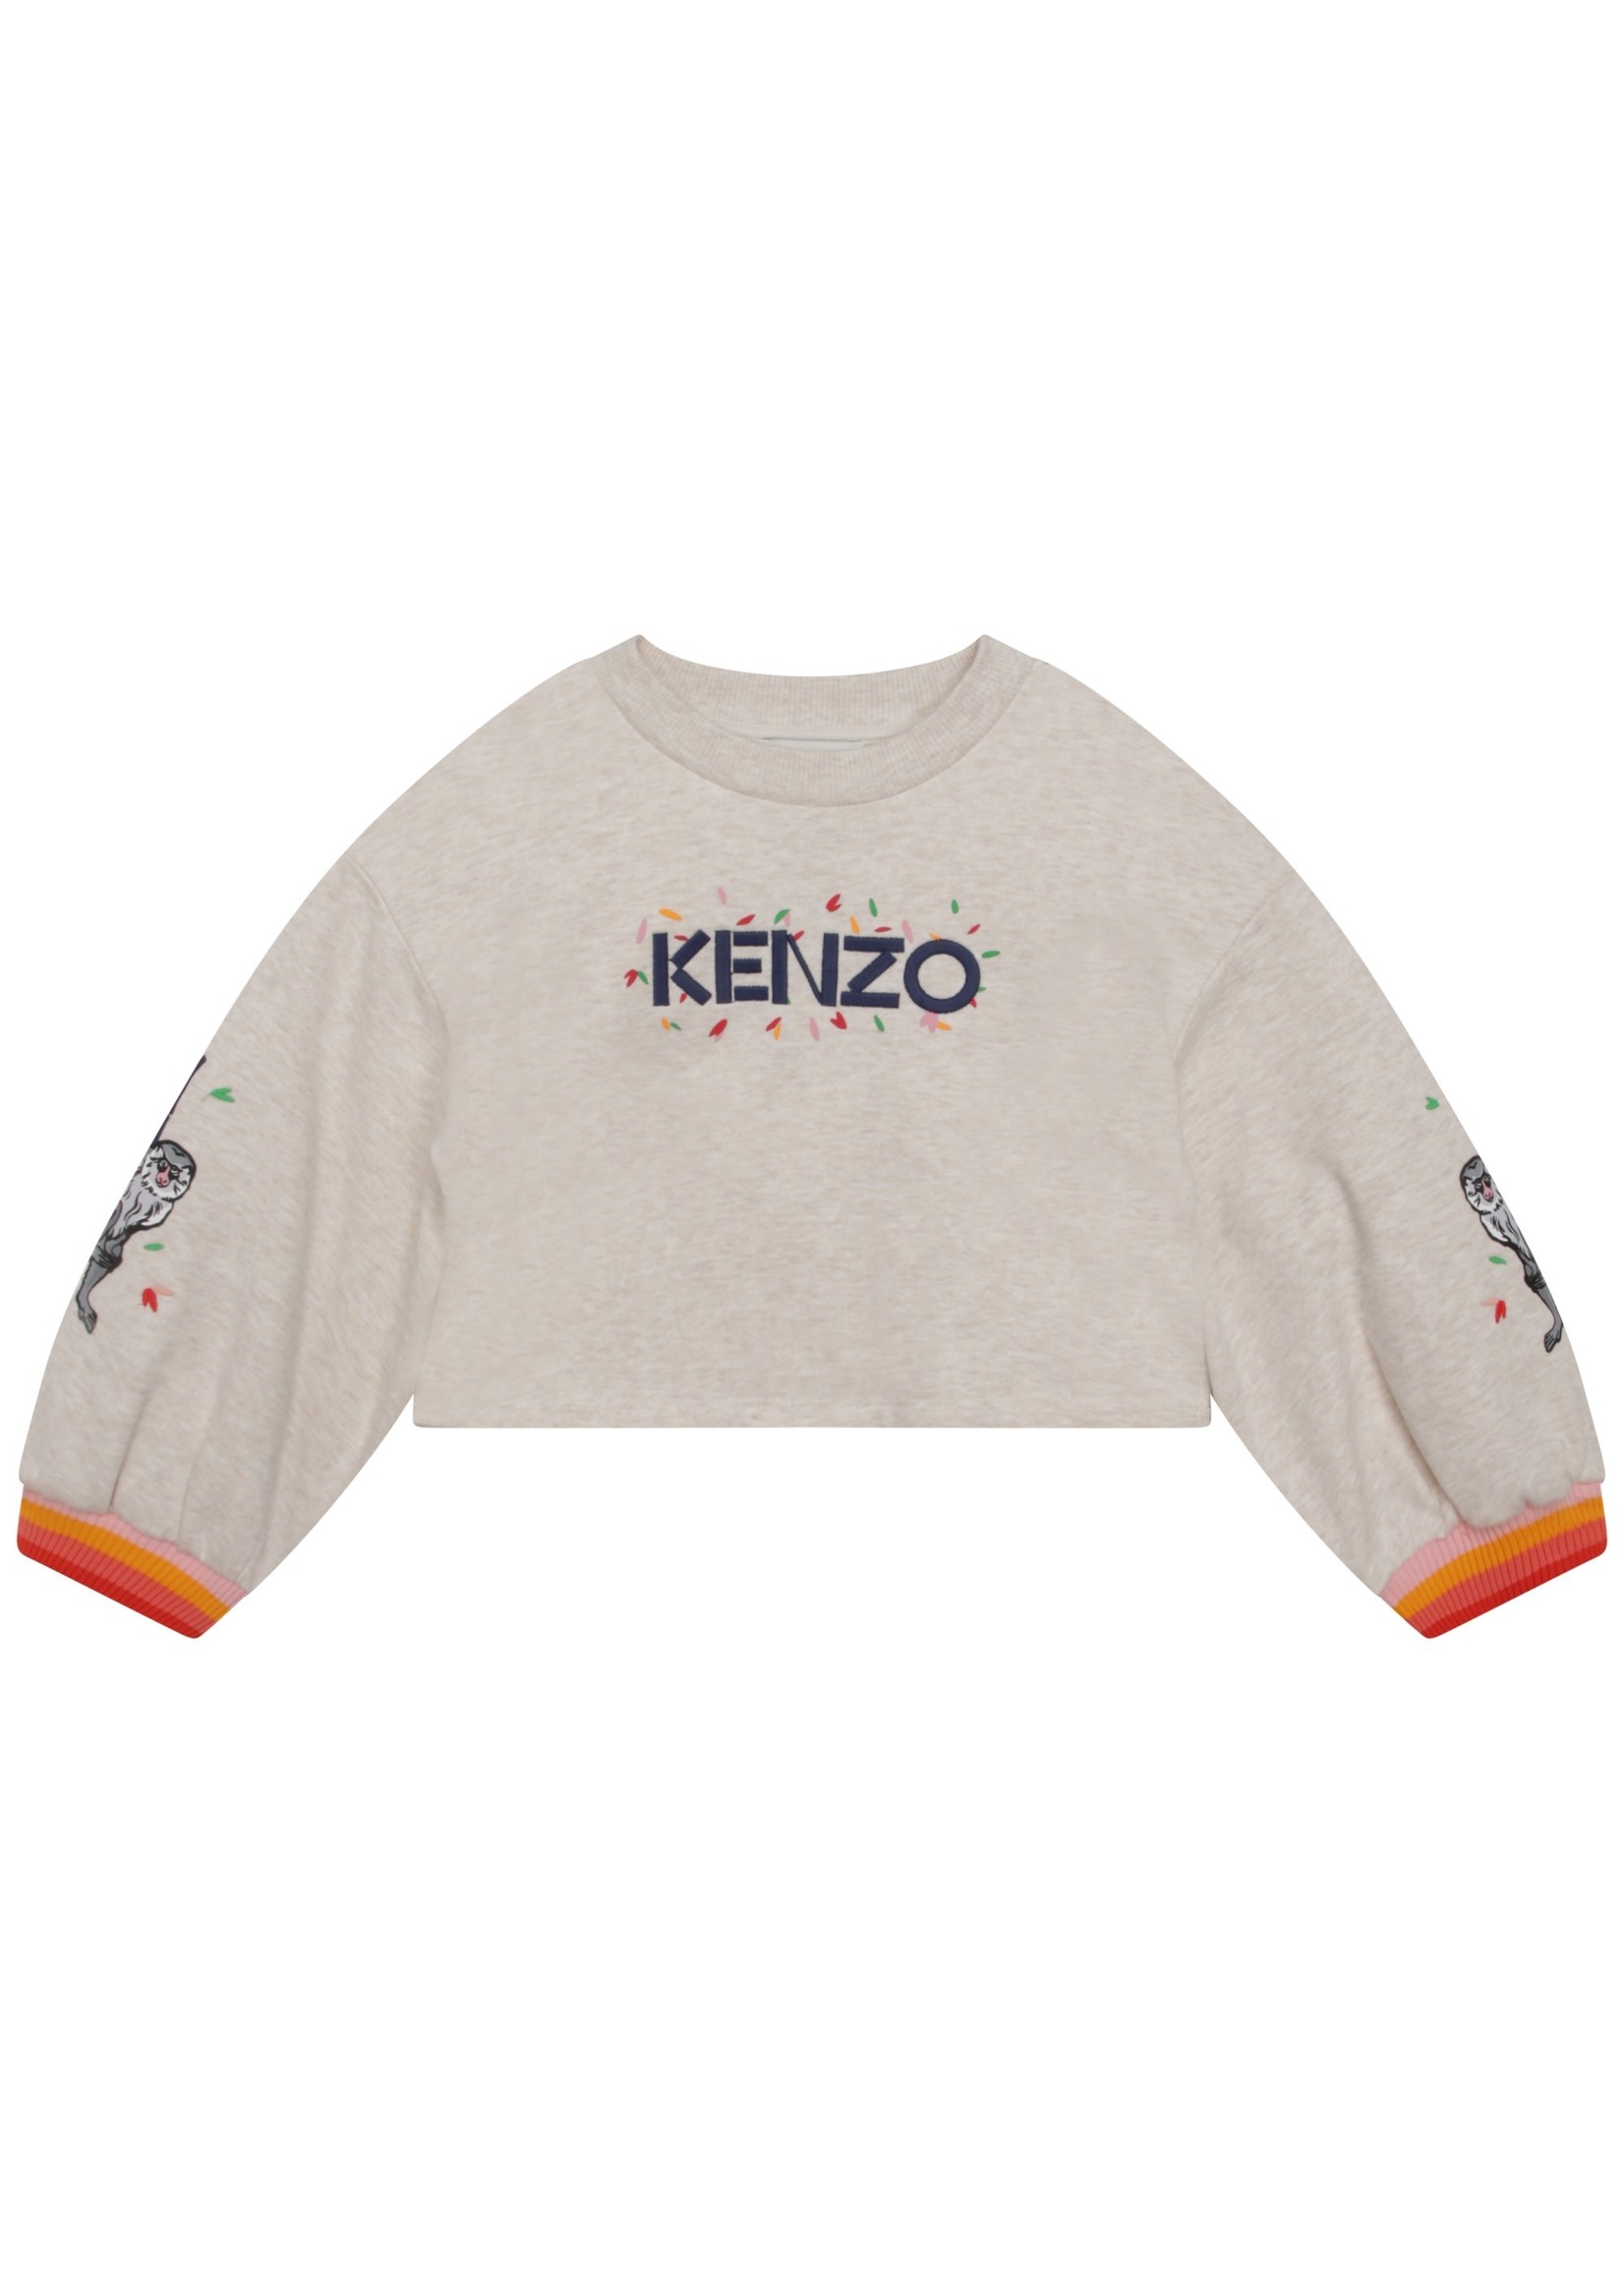 KENZO Kenzo 2 in 1 Jurk + Sweater Grijs/Blauw